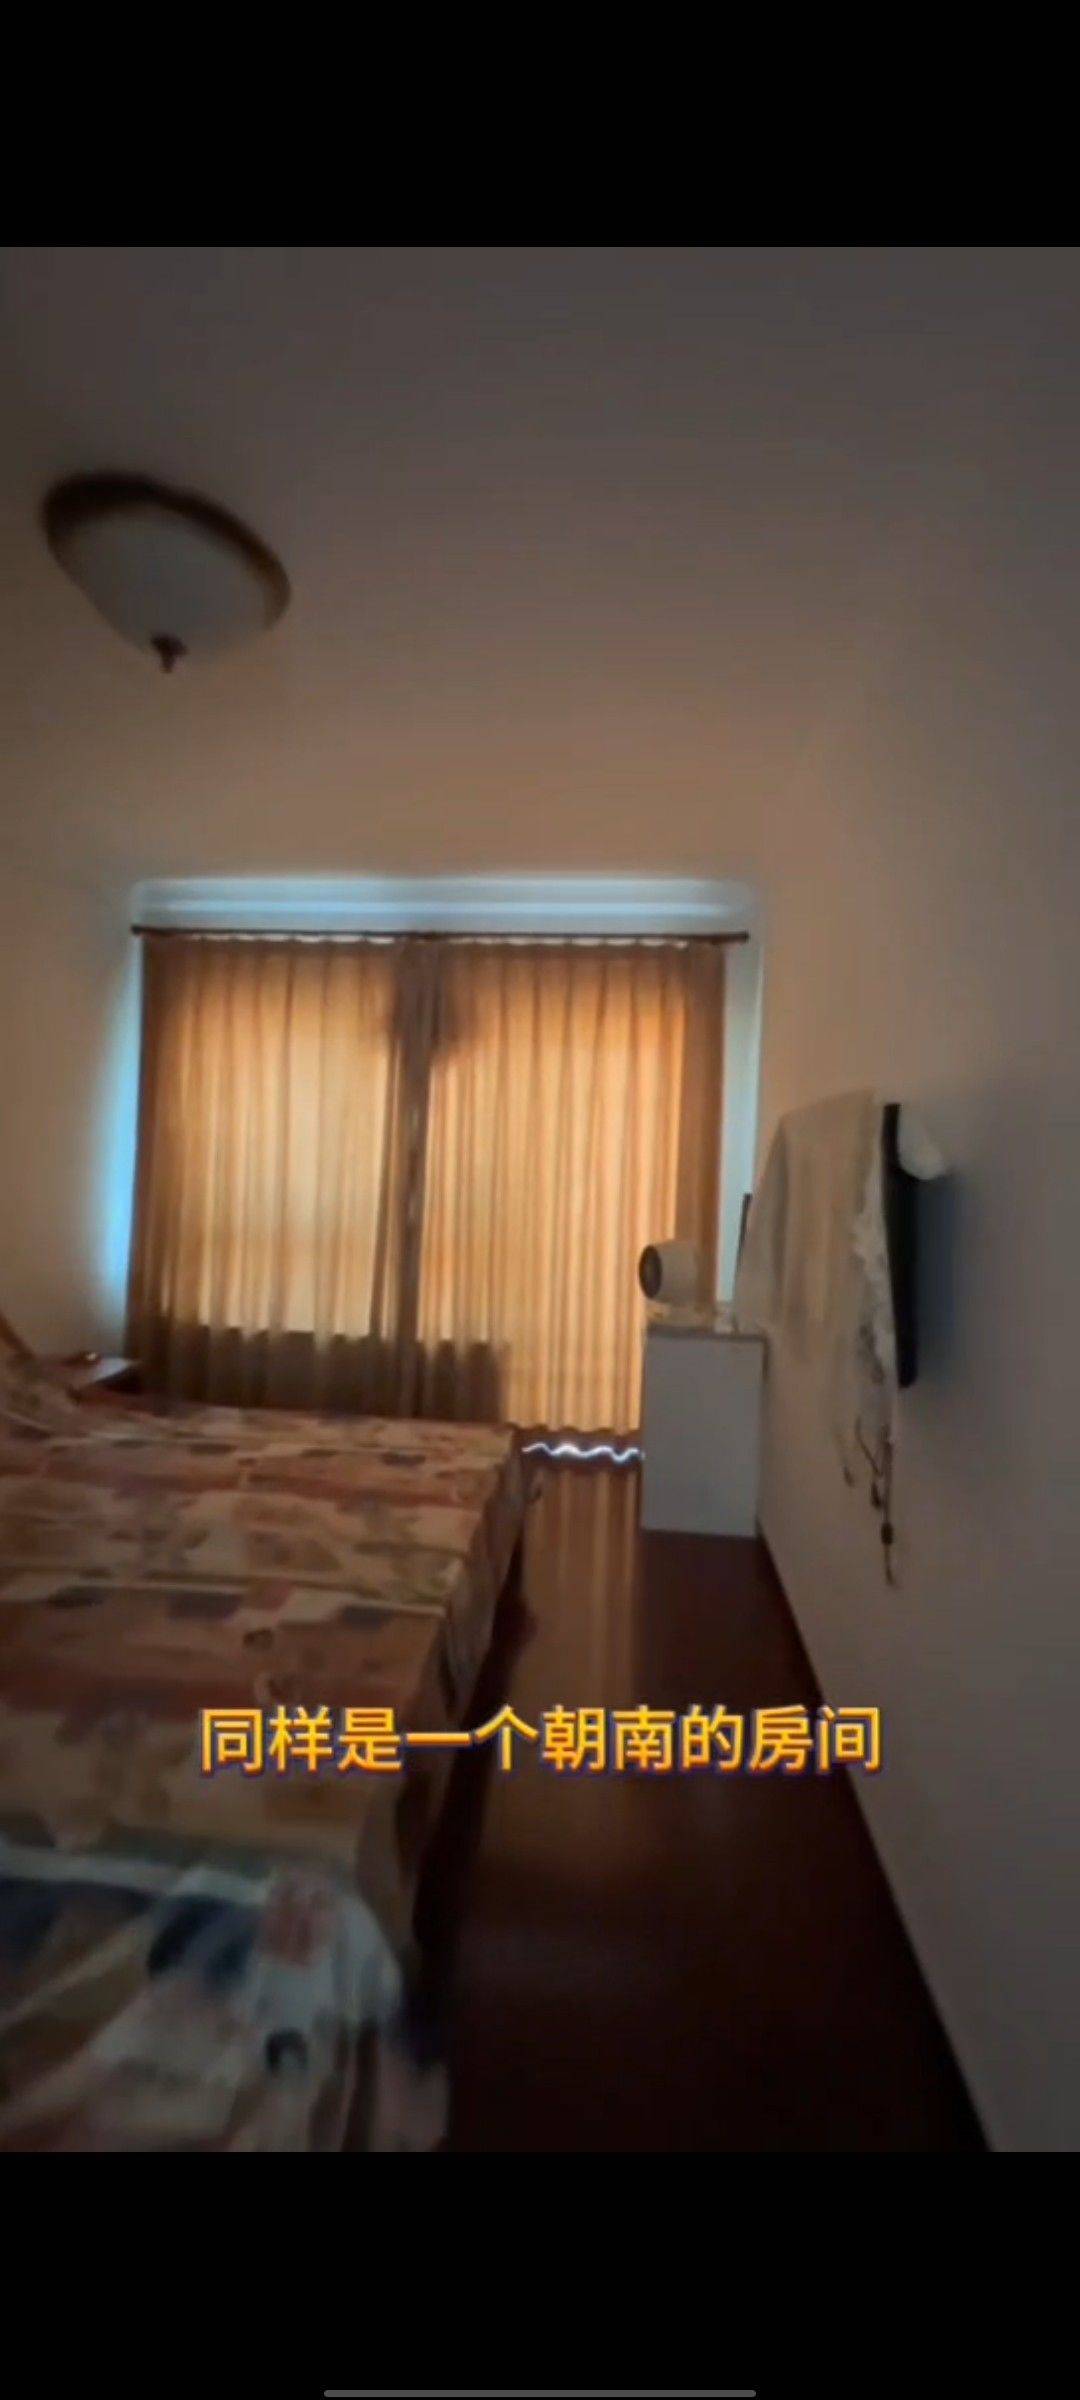 Shanghai-Pudong-Cozy Home,Clean&Comfy,No Gender Limit,Hustle & Bustle,“Friends”,Chilled